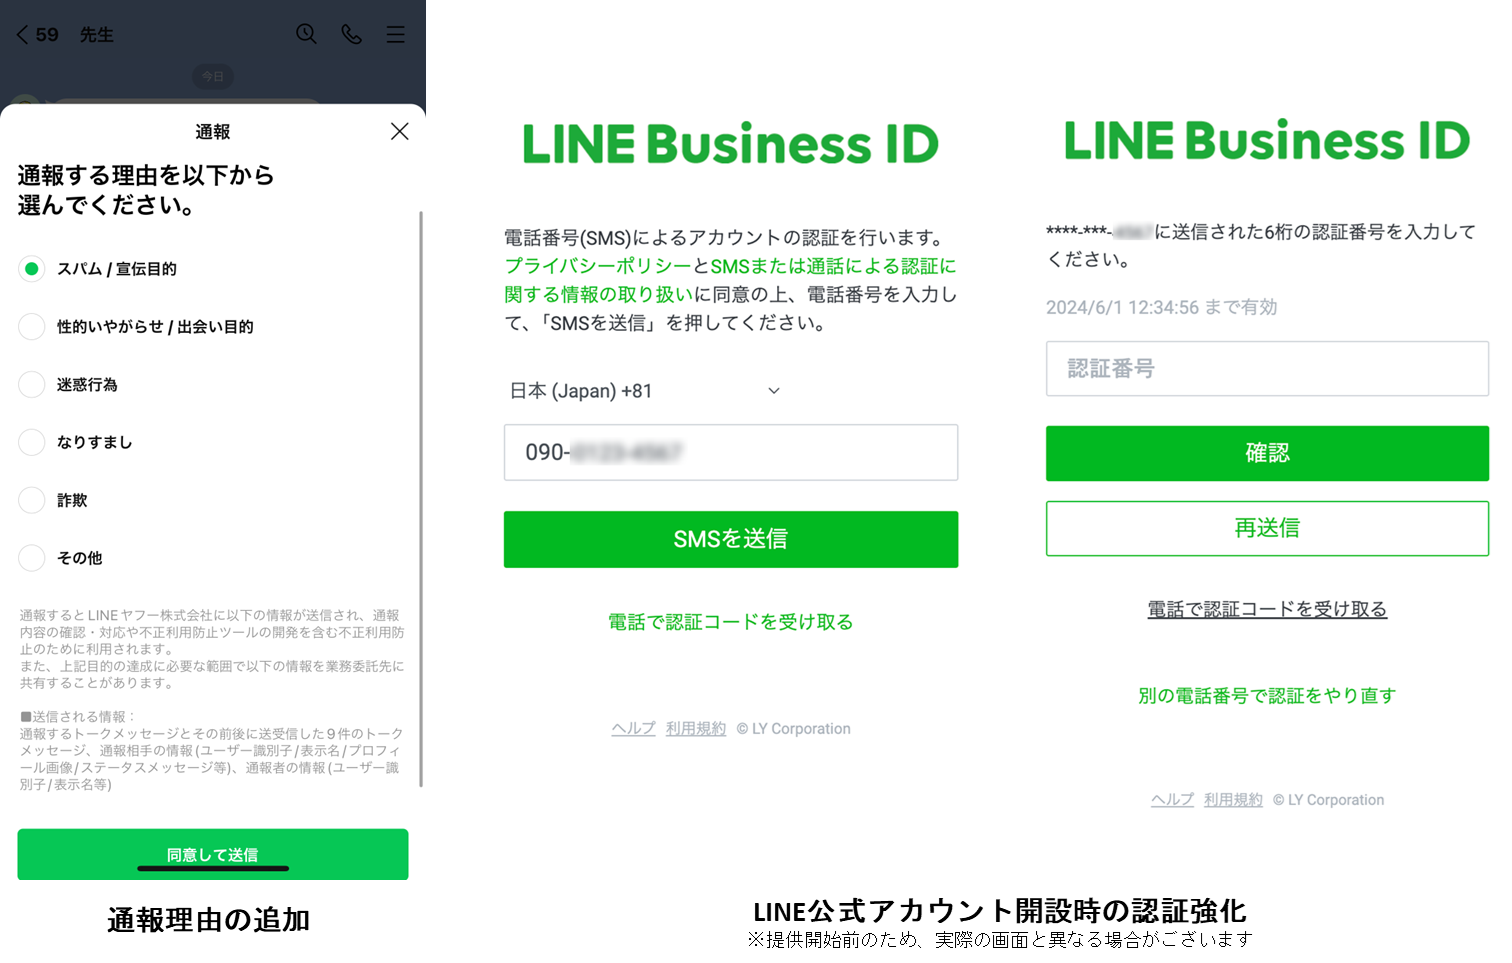 【LINEヤフー】「LINE」の安心・安全な利用環境実現のため詐欺対応を強化、新たに4つの対応を順次開始